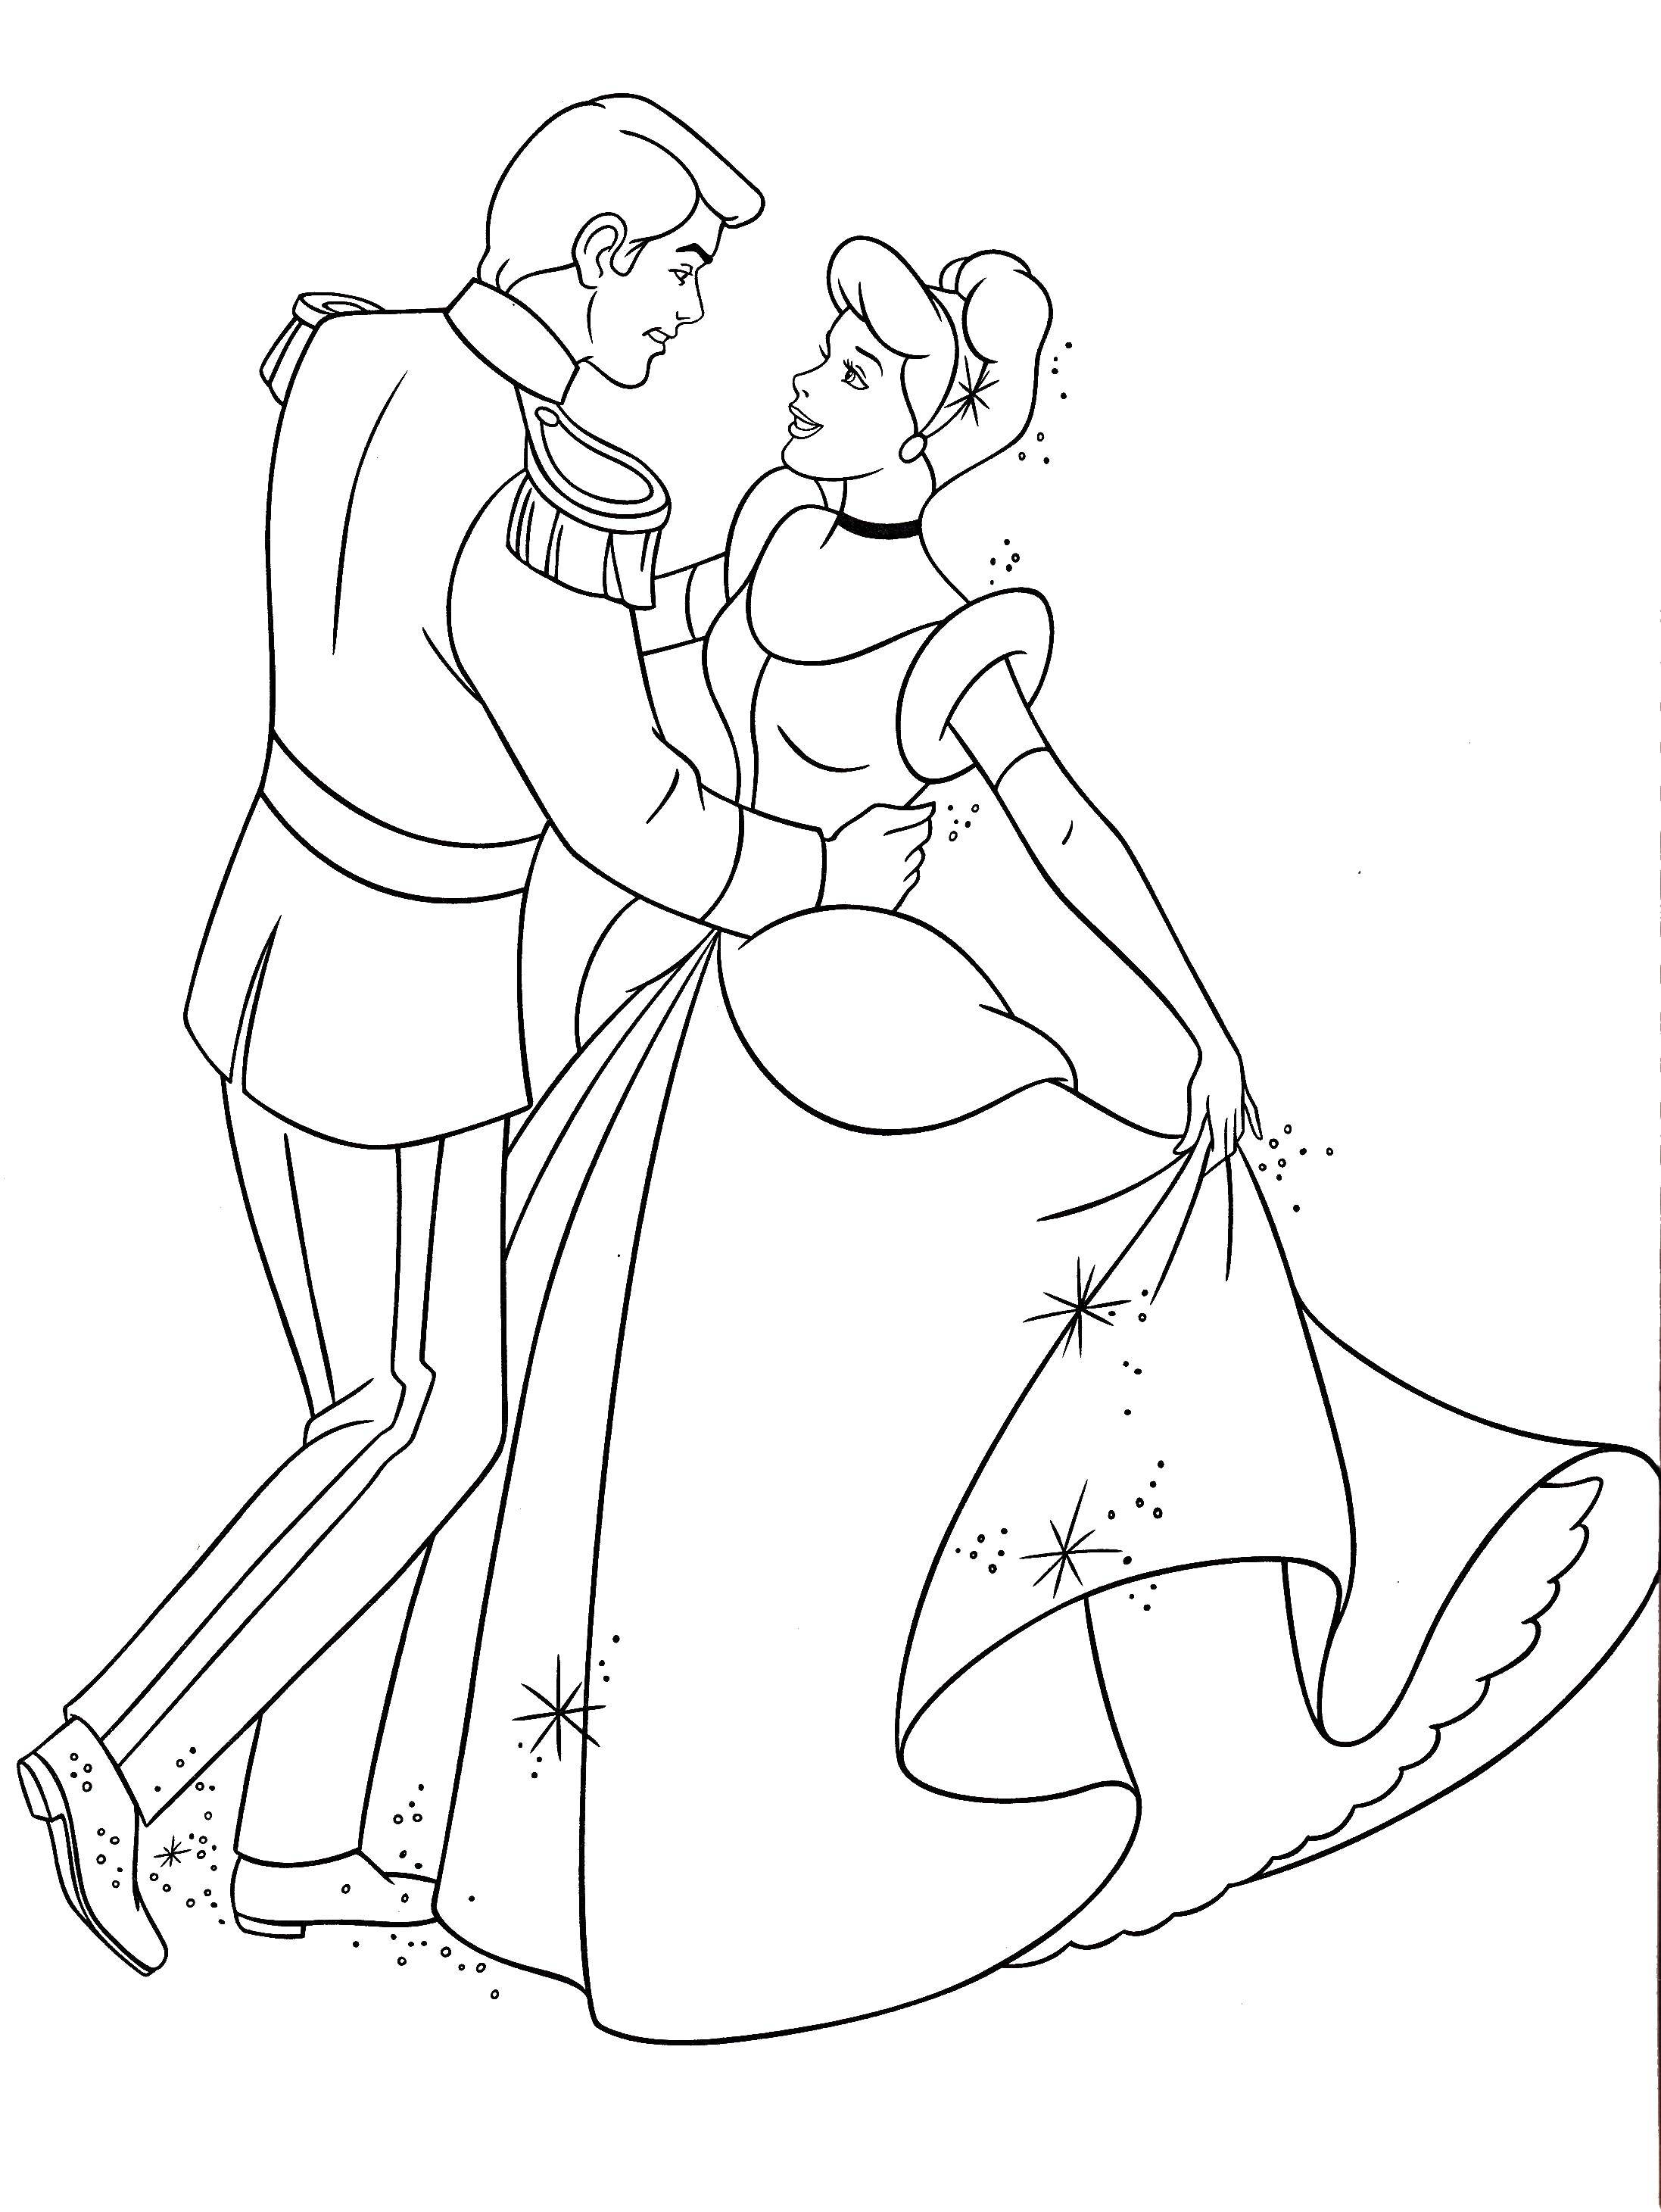 Coloring Cinderella dancing with the Prince. Category Princess. Tags:  princesses, cartoons, fairy tales, Cinderella.